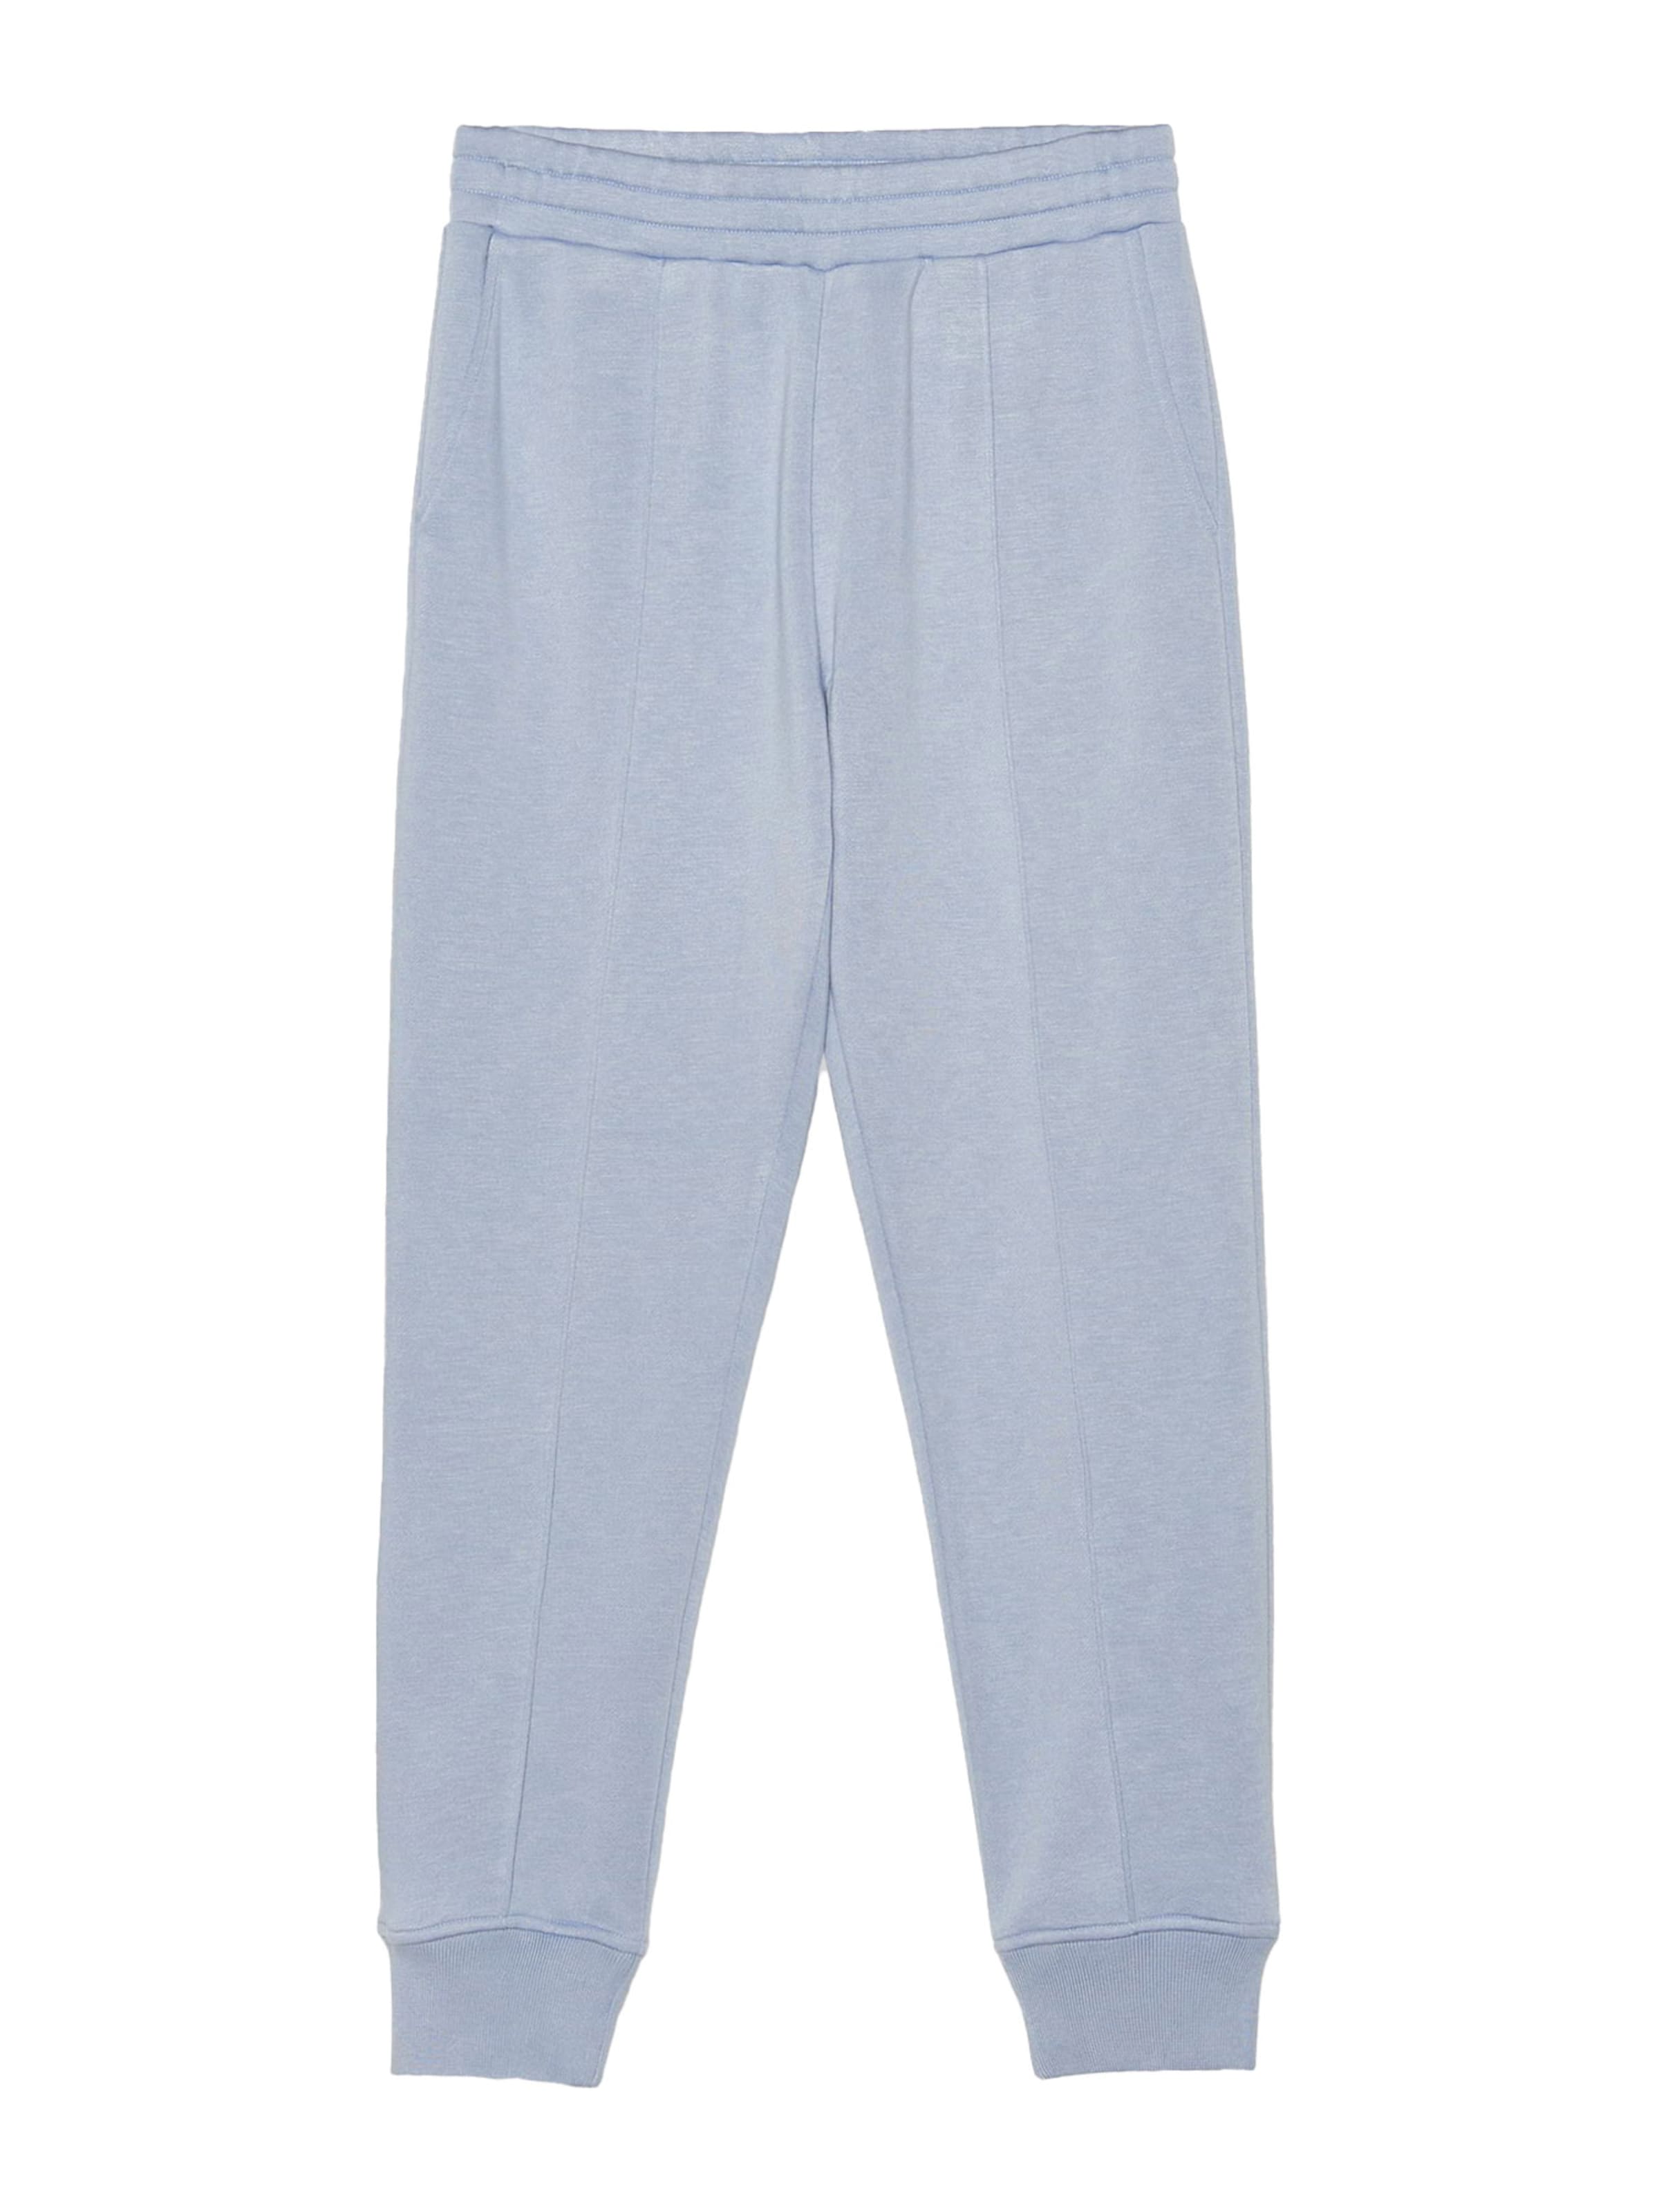 PROMO Donna Someday Pantaloni Chuni in Blu Chiaro 